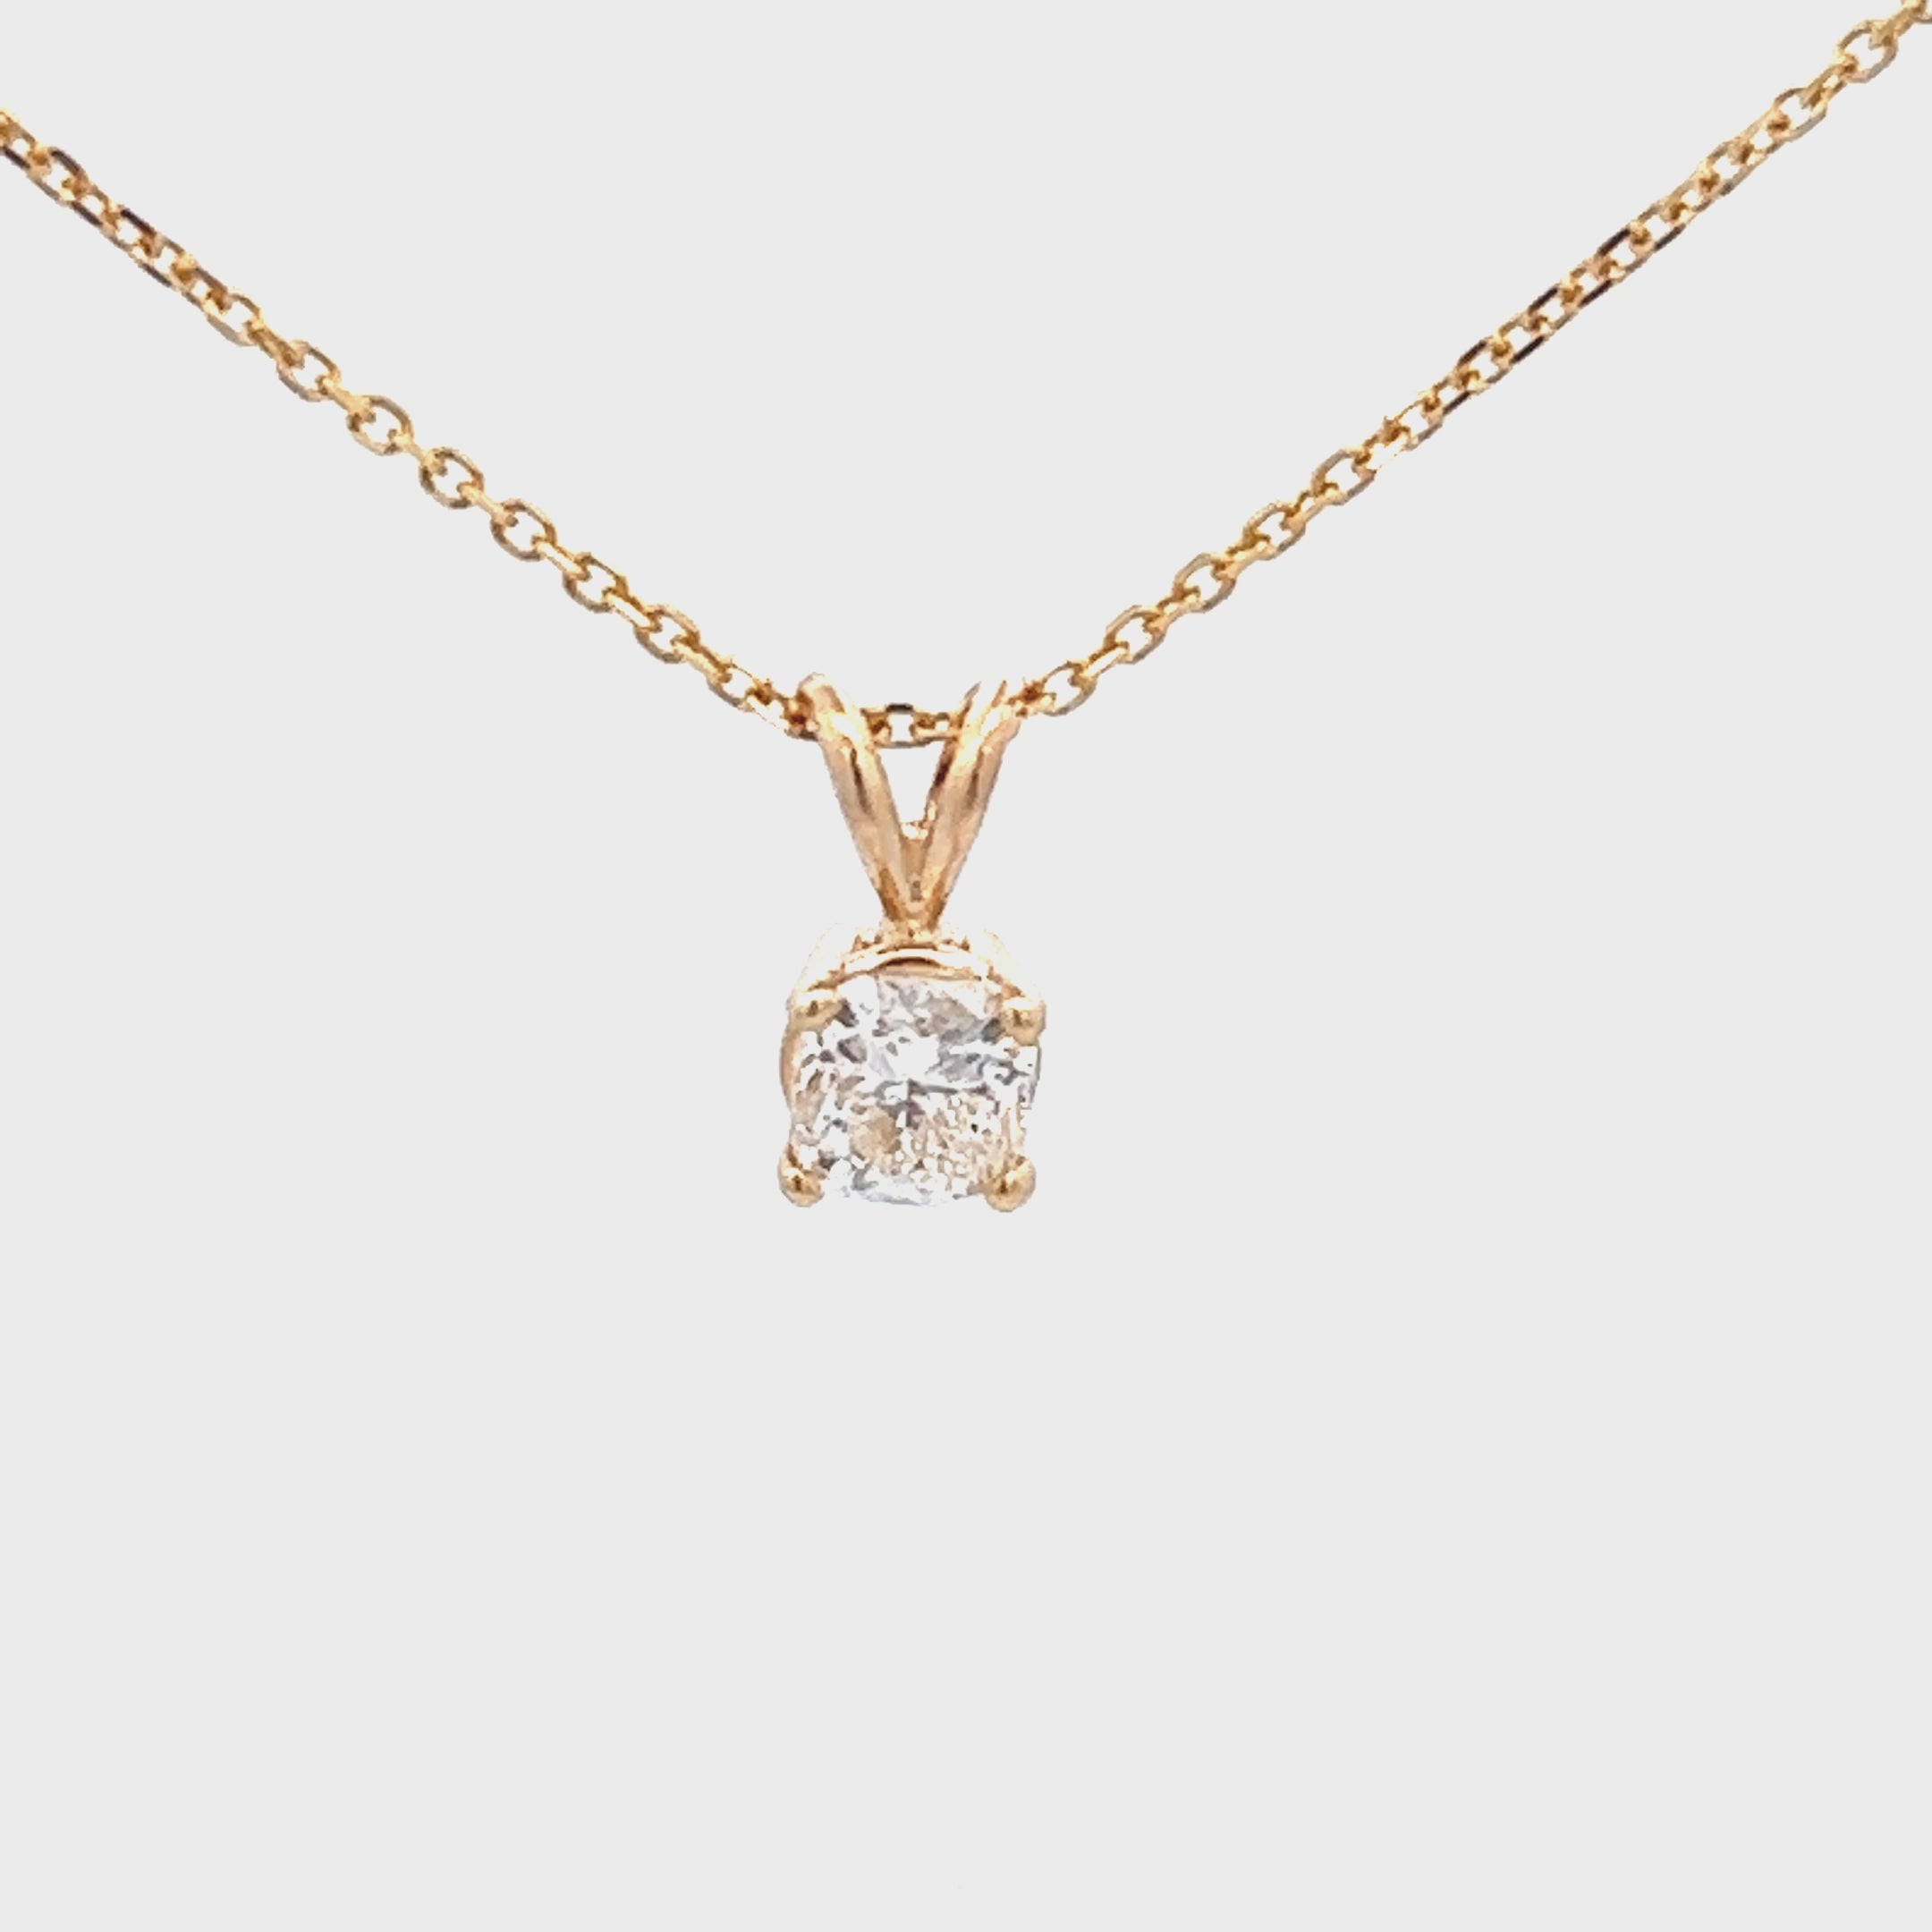 71ct Cushion Cut Diamond Pendant Necklace | 14k Yellow Gold Chain